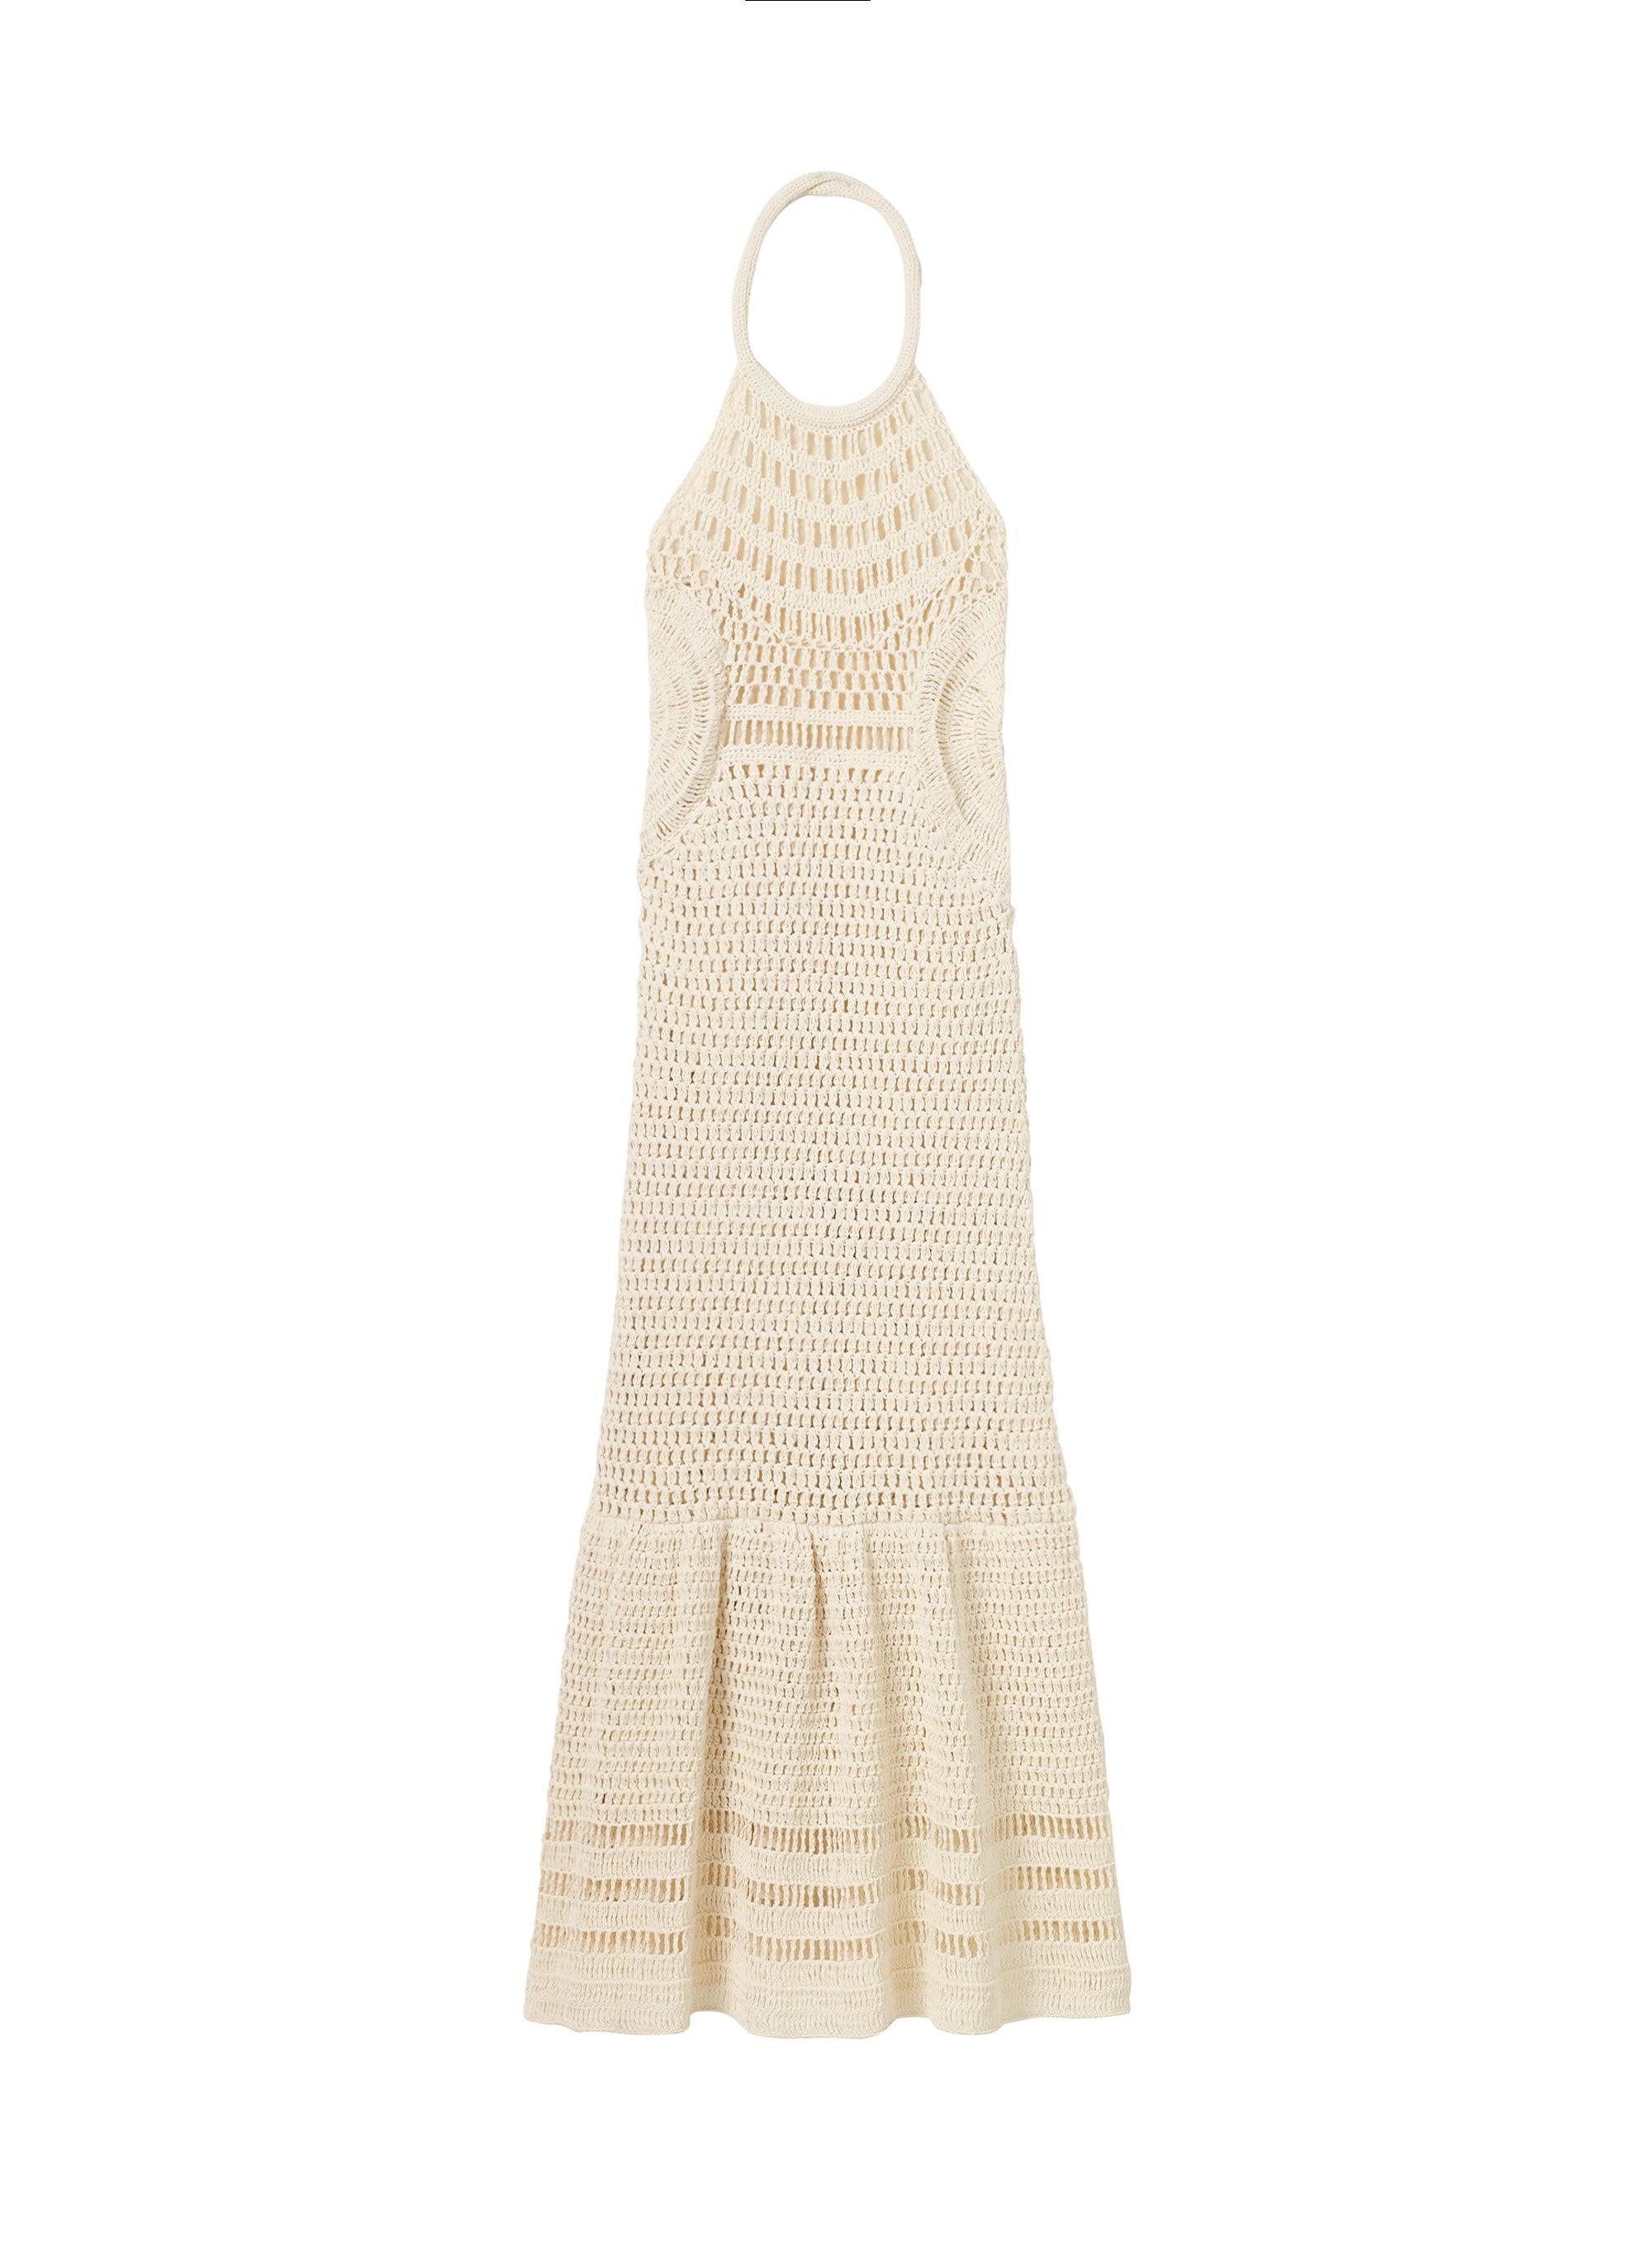 A.L.C. Antonia Crochet Halter Dress in White